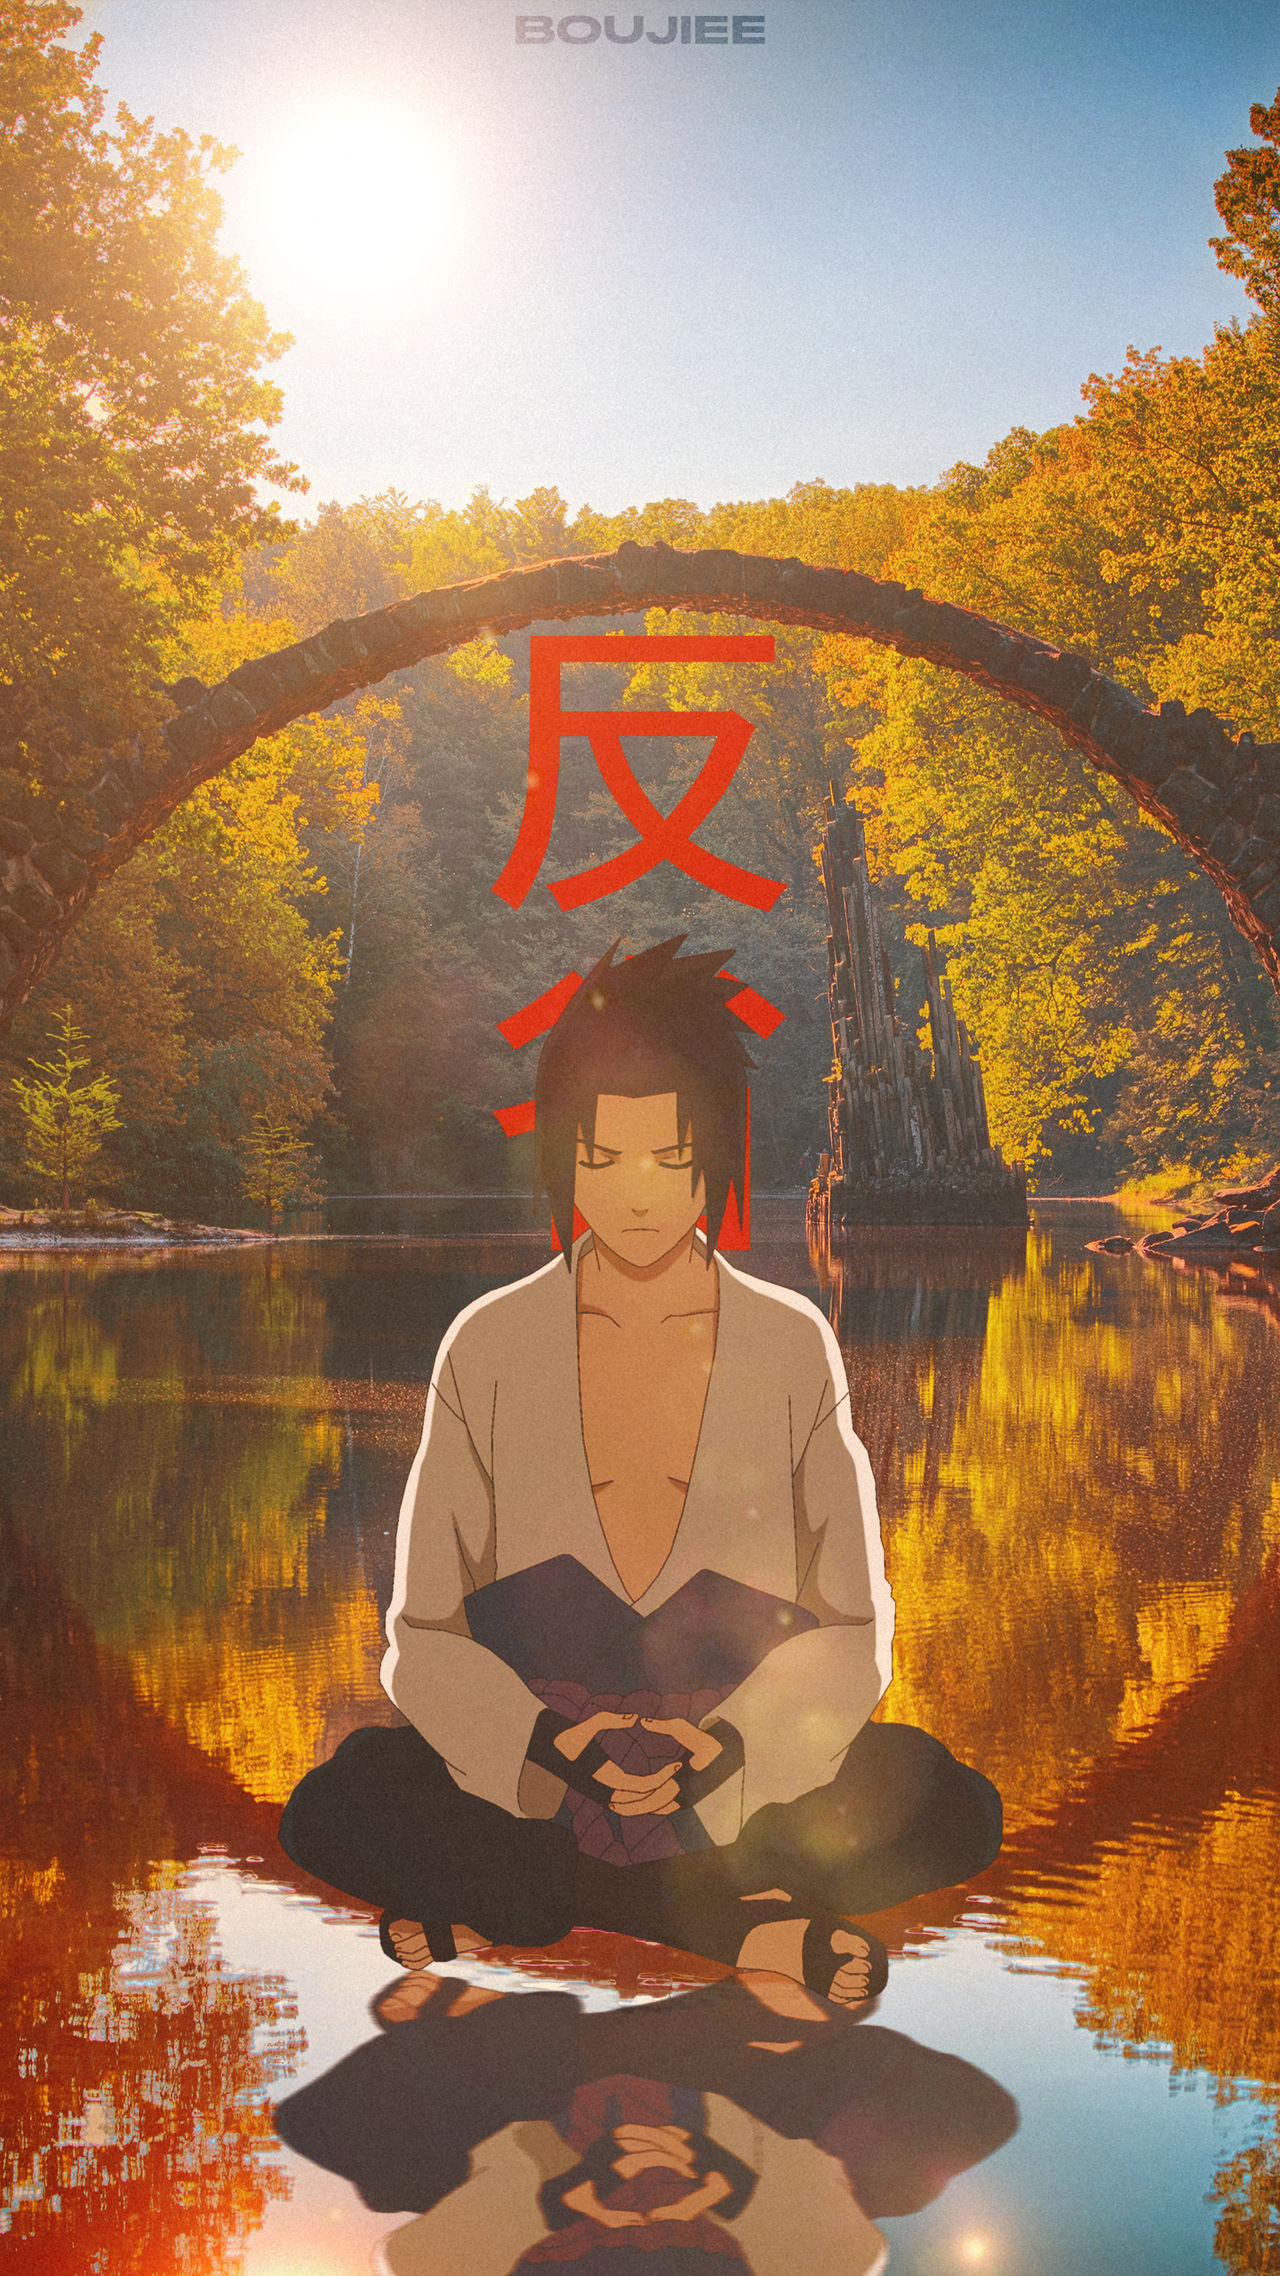 Sasuke Meditating Wallpaper by Boujiee on DeviantArt